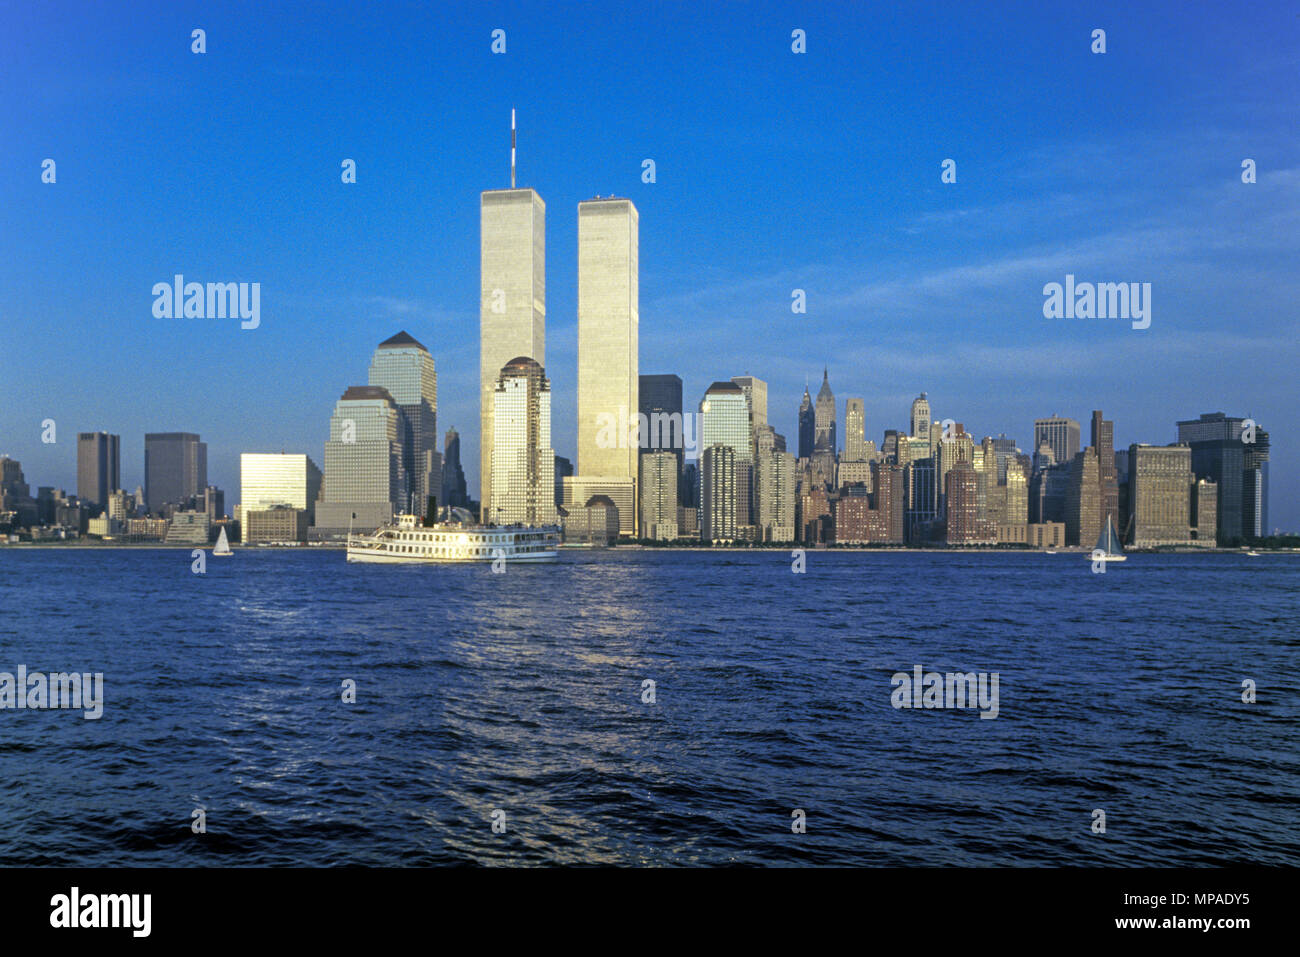 1988 HISTORICAL TWIN TOWERS DOWNTOWN SKYLINE HUDSON RIVER MANHATTAN NEW YORK CITY USA Stock Photo